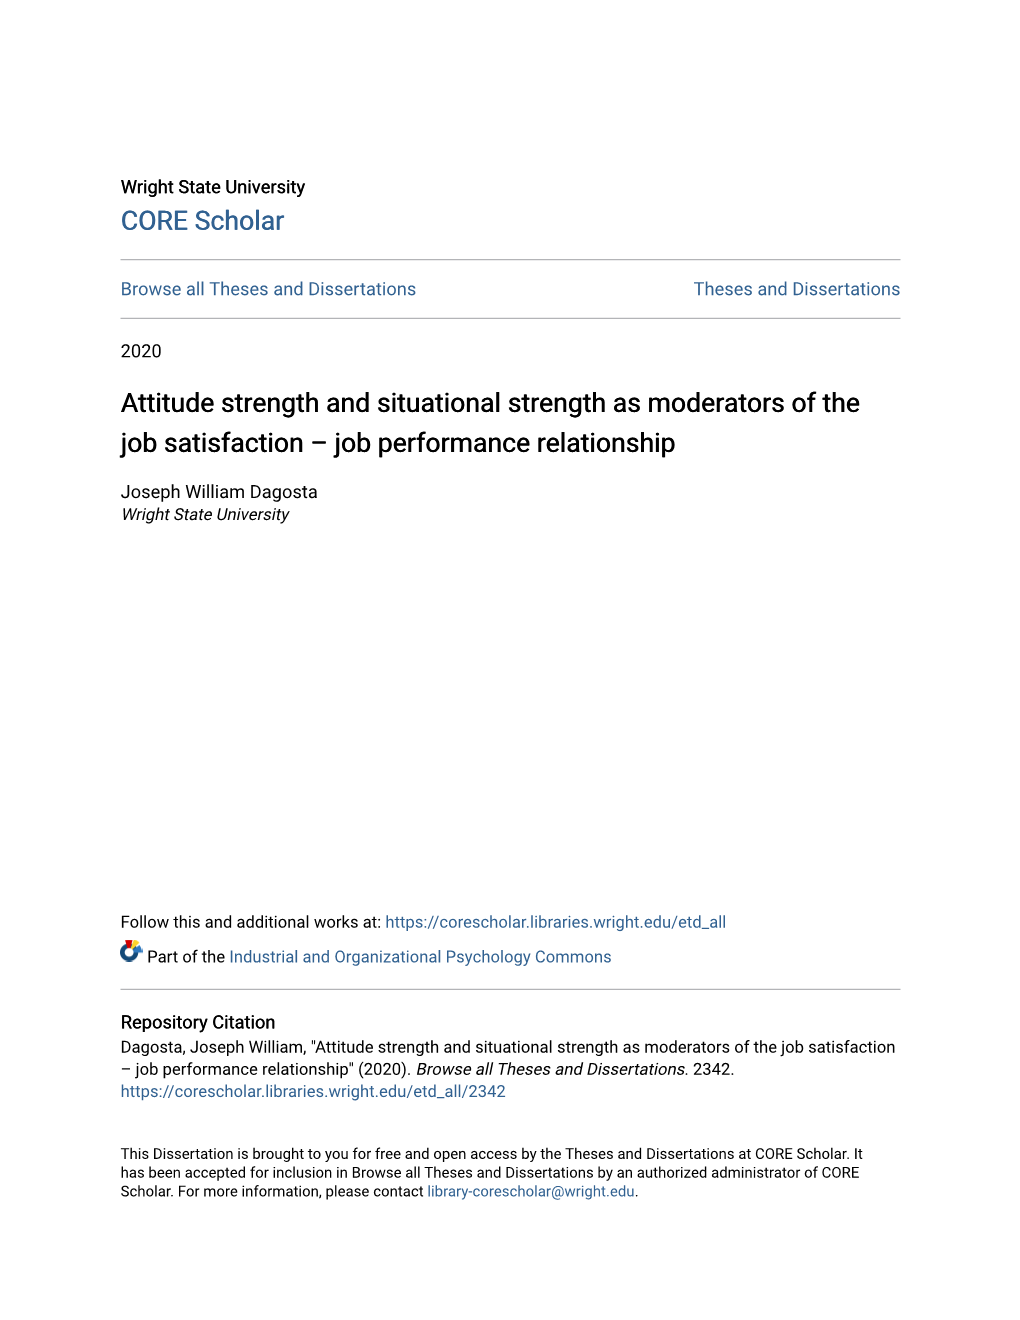 Attitude Strength and Situational Strength As Moderators of the Job Satisfaction – Job Performance Relationship